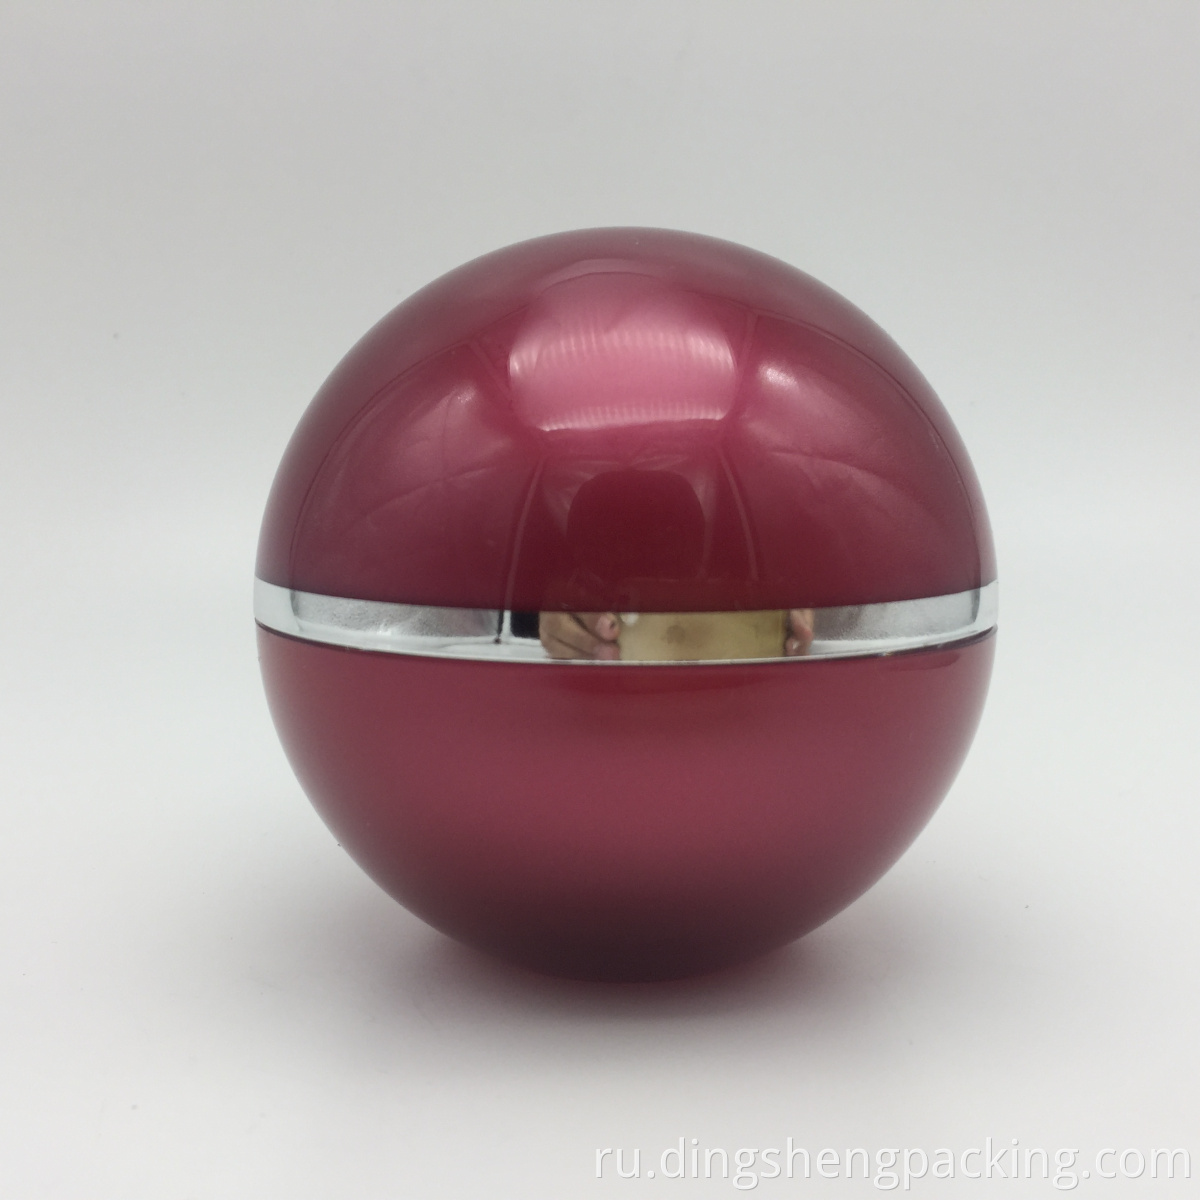 15g 30g 50g 100g Empty Personal Care Red Round Ball Shape Plastic Acrylic Cream Jar